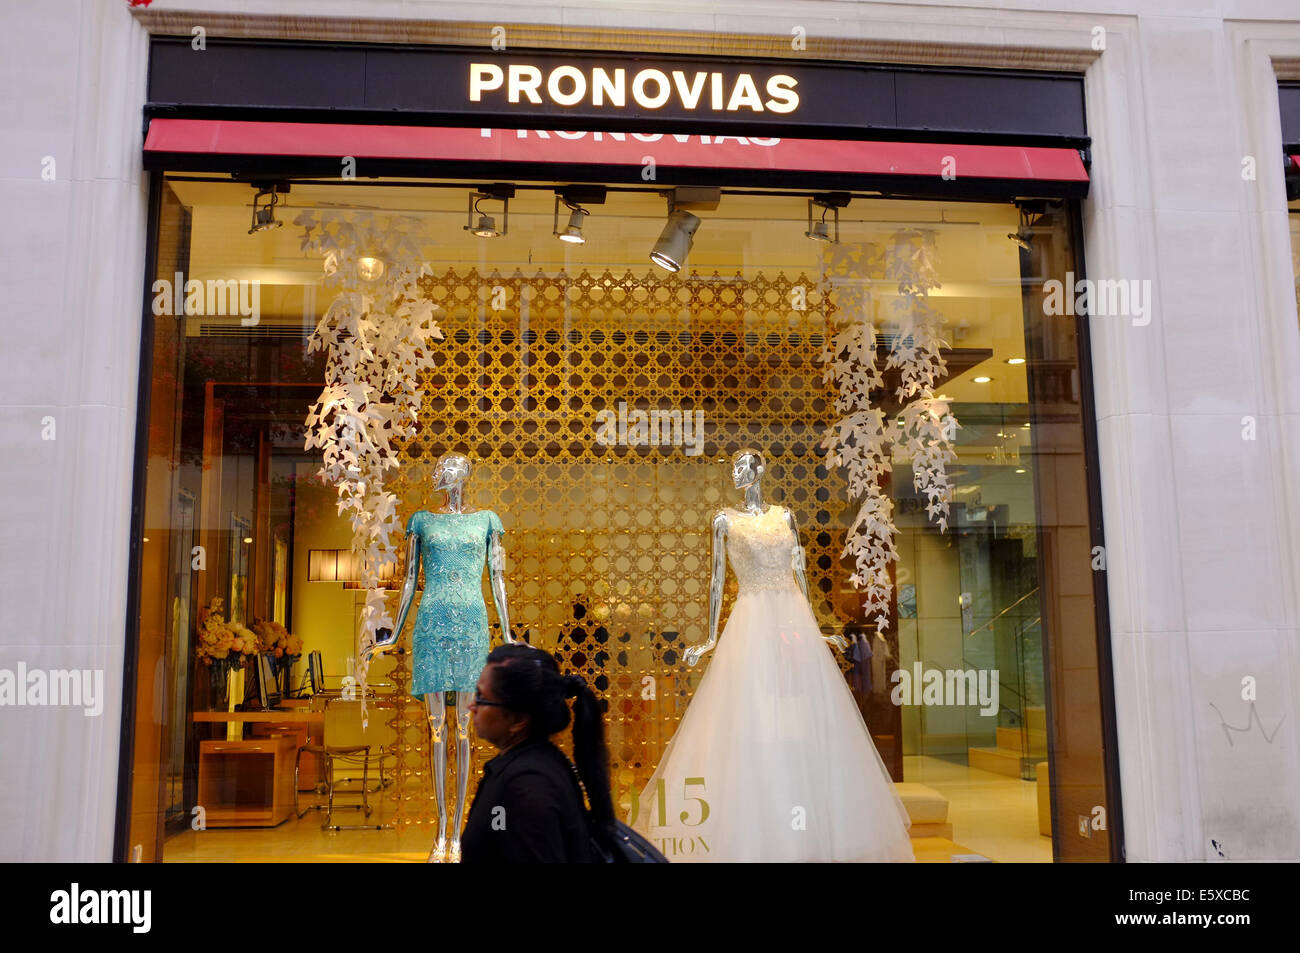 Pronovias wedding dress shop in London Stock Photo